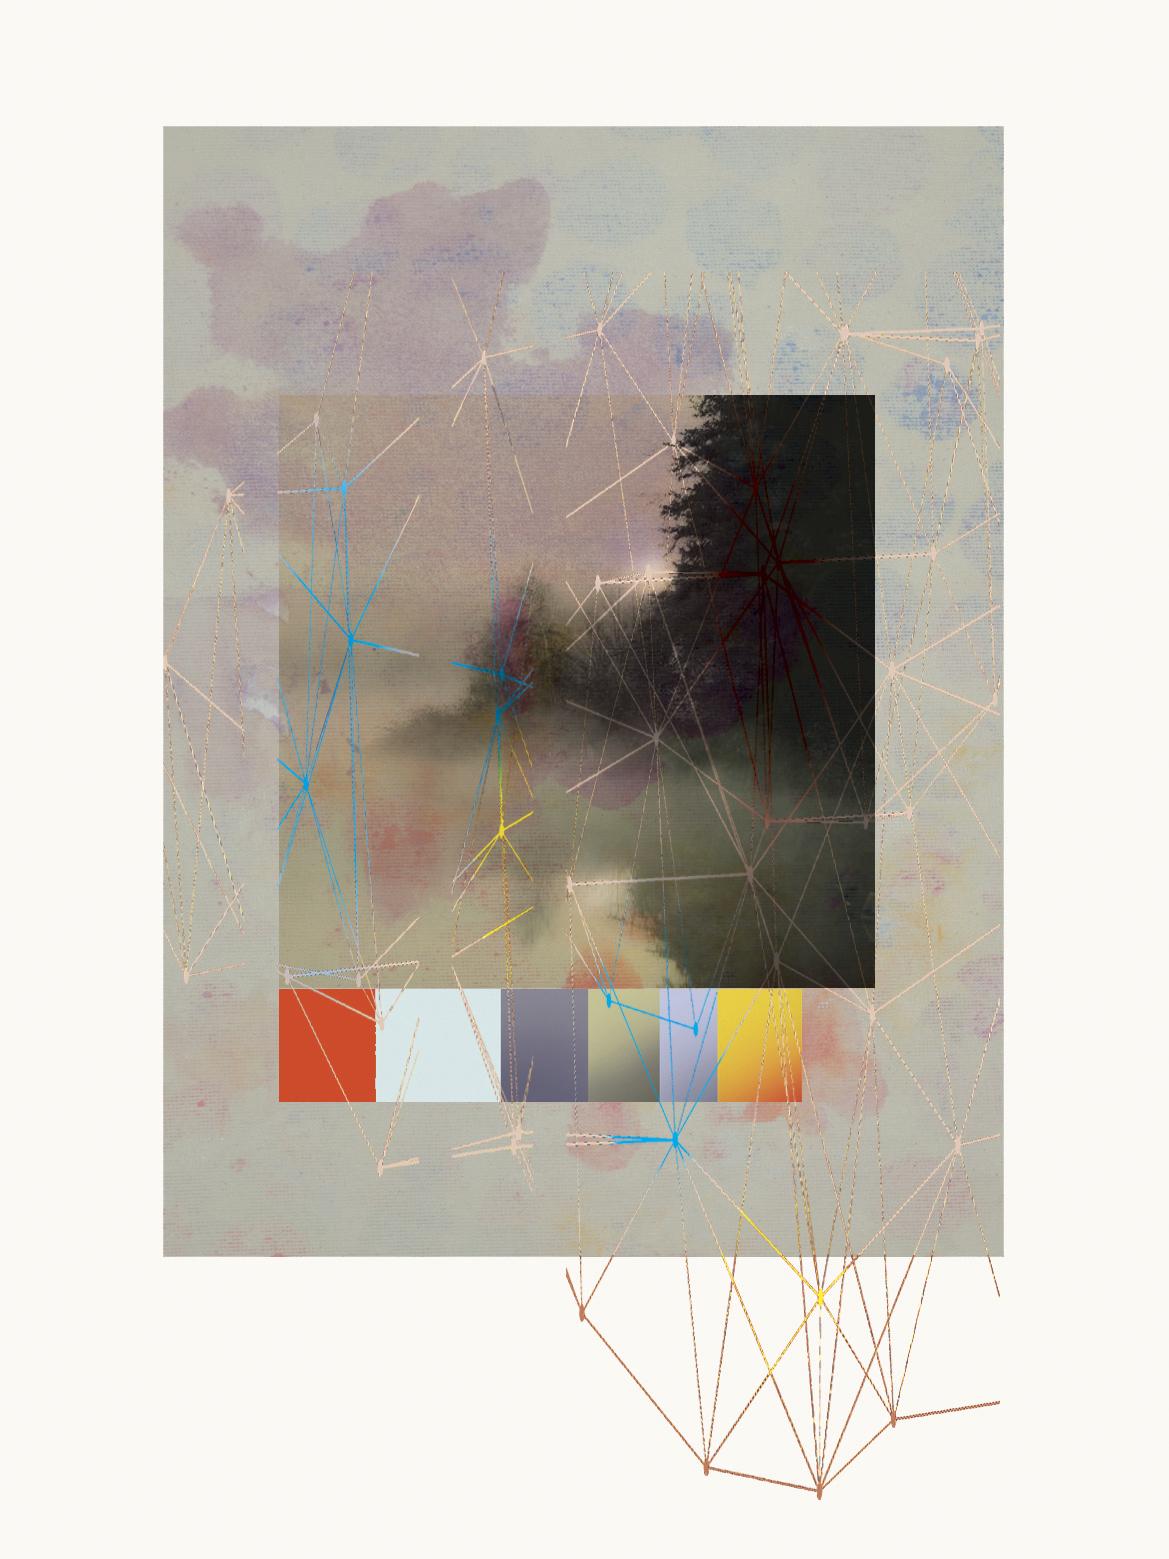 Francisco Nicolás Abstract Print - River -Contemporary, Abstract, Modern, Pop art, Surrealist, Landscape, Geometric